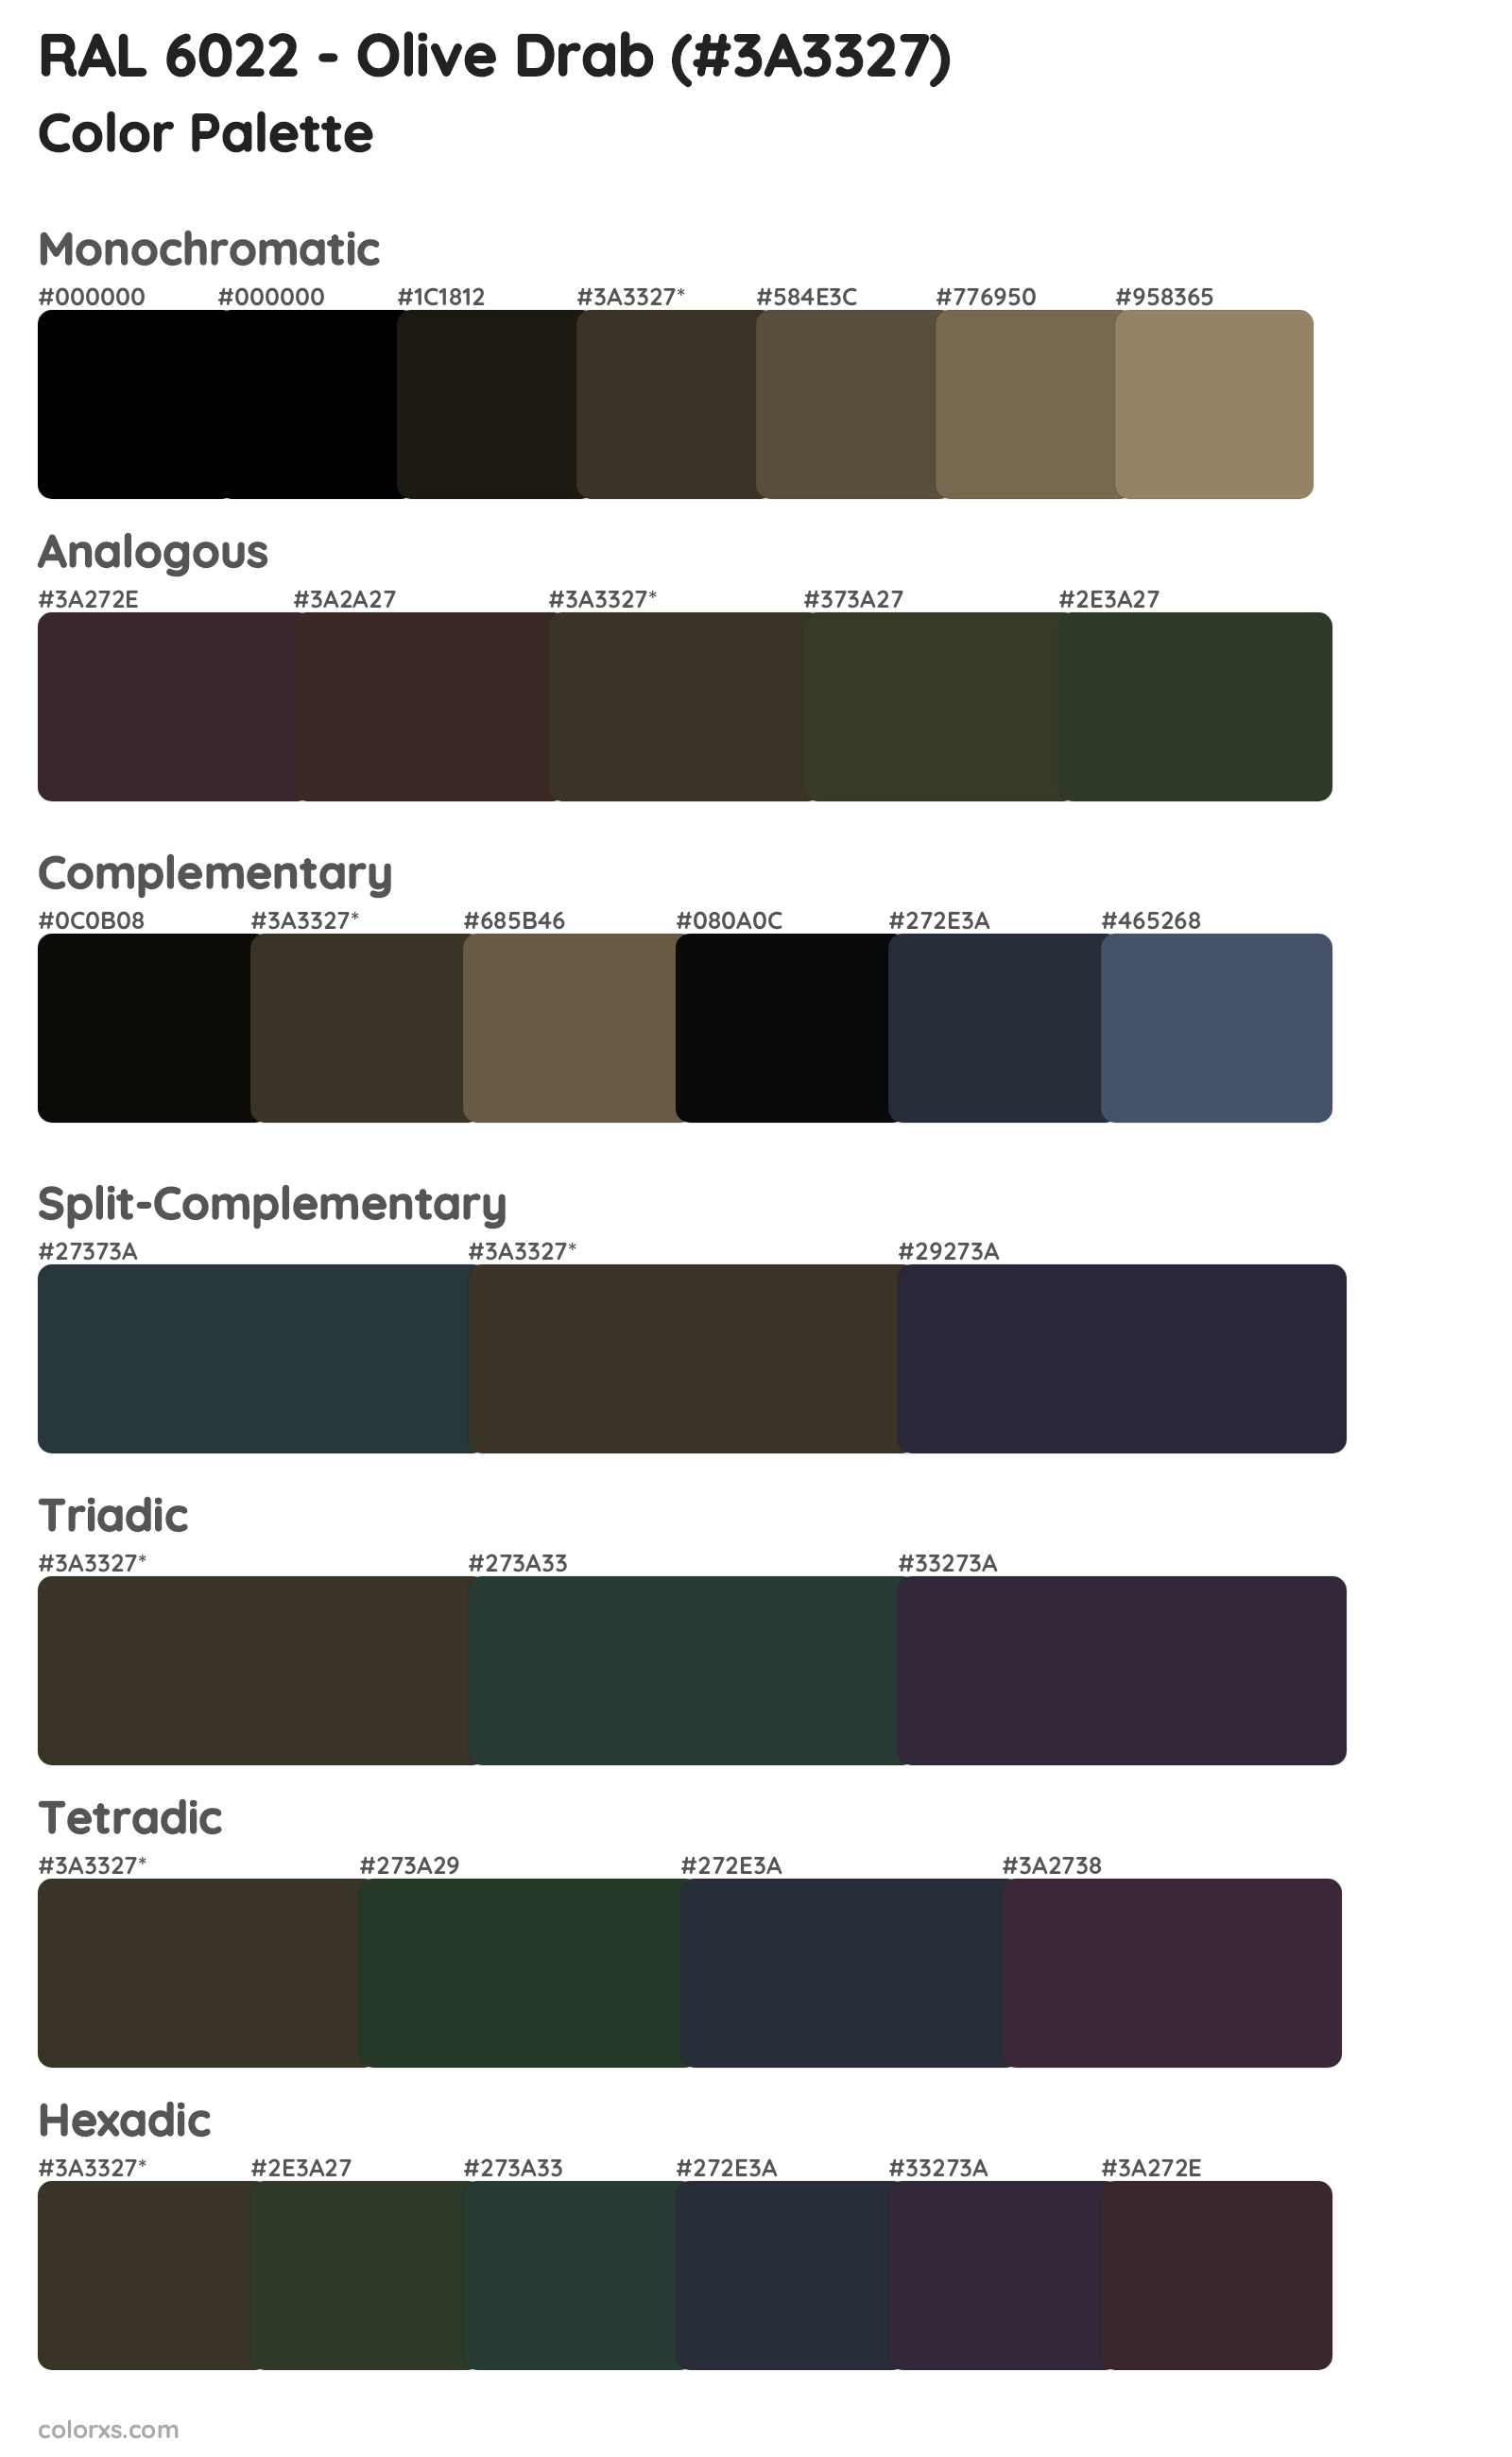 RAL 6022 - Olive Drab Color Scheme Palettes